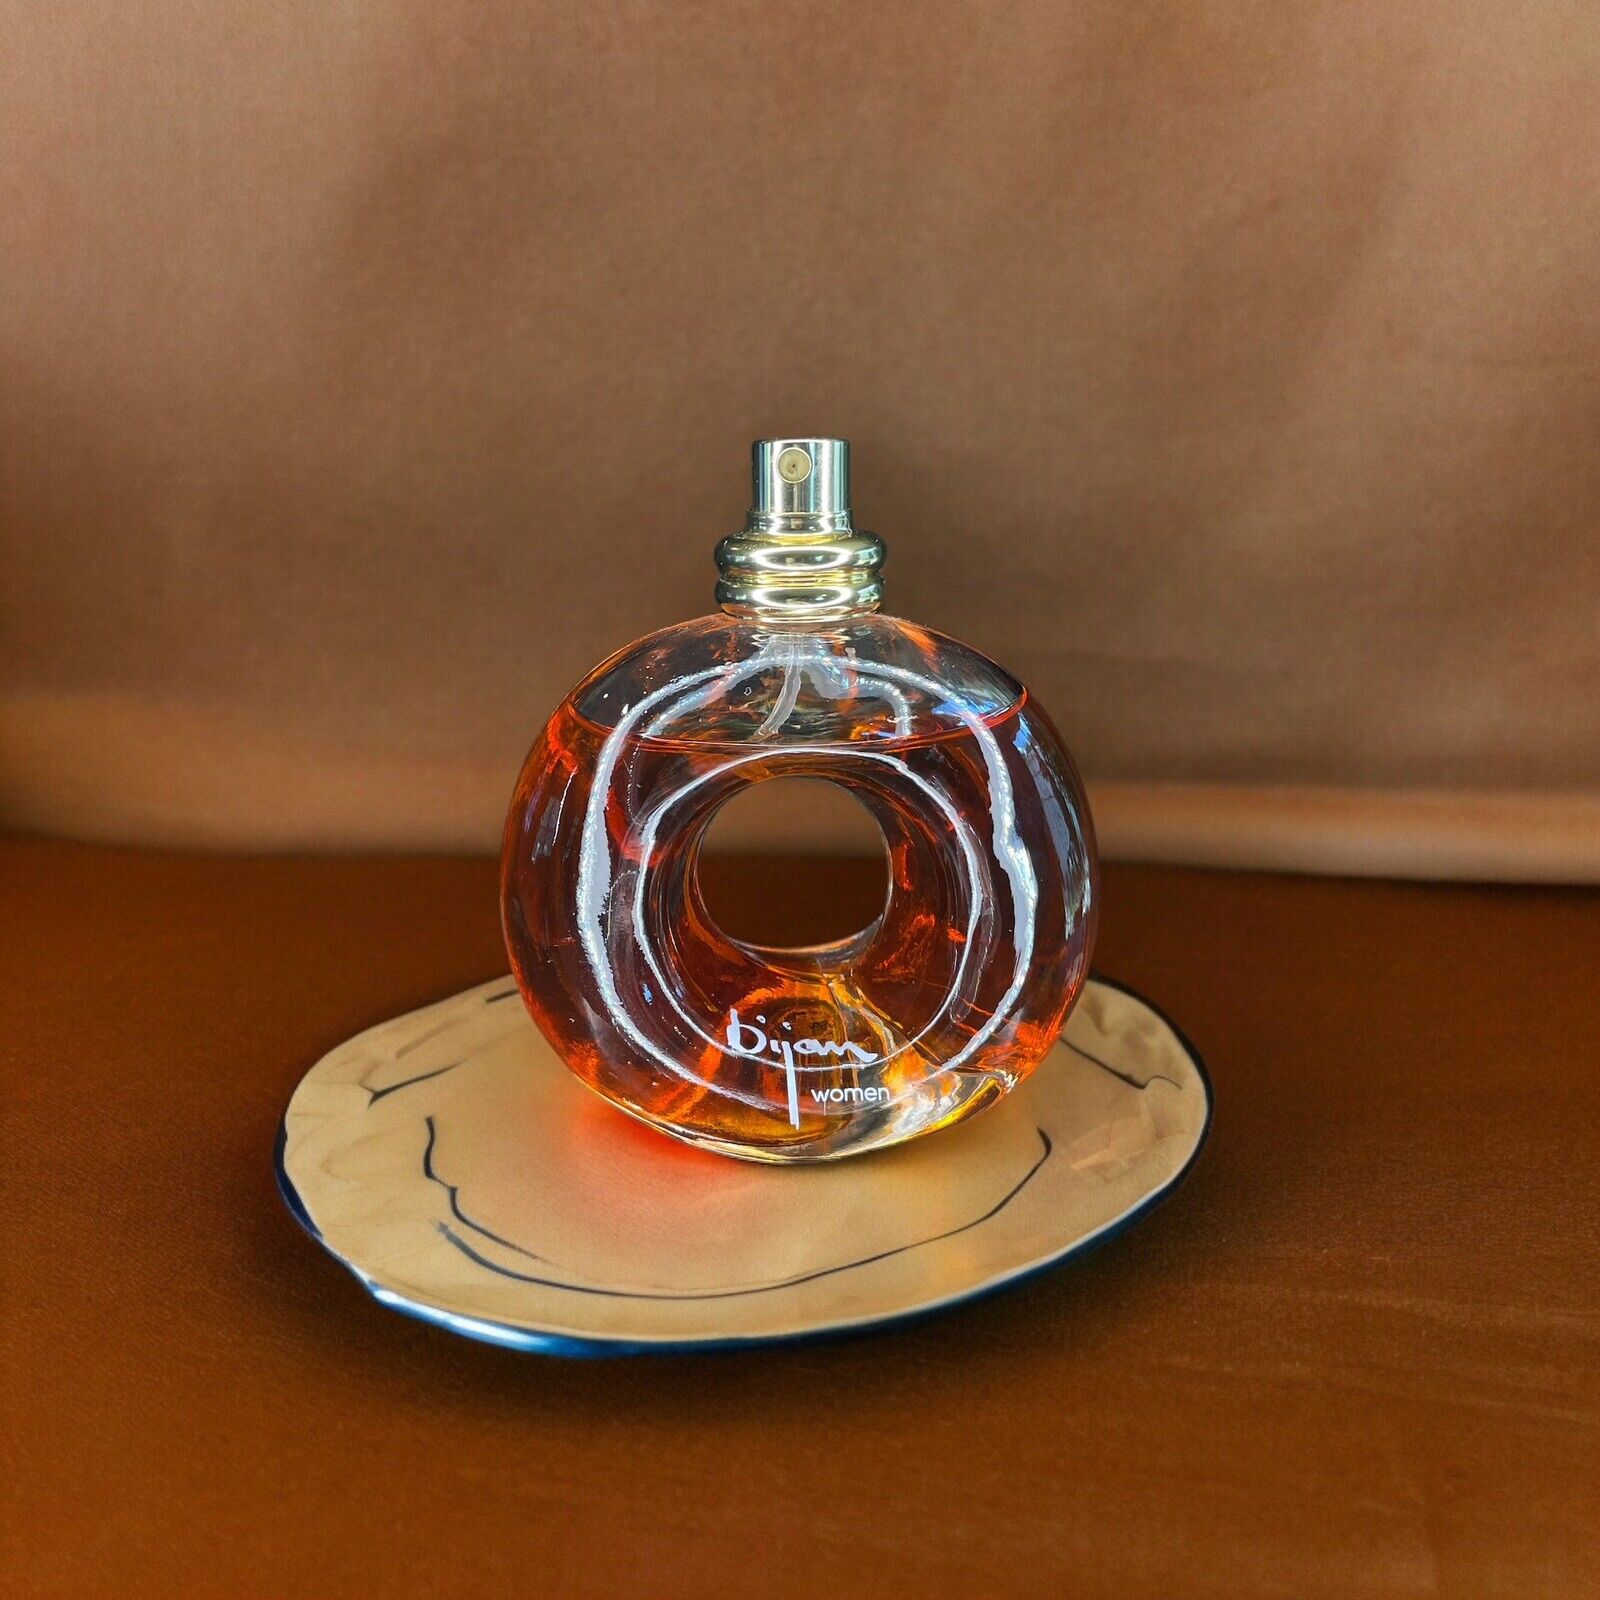 Bijan Vintage Women Perfume Eau De Parfum 2.5 Fl. Oz. / 75 mL